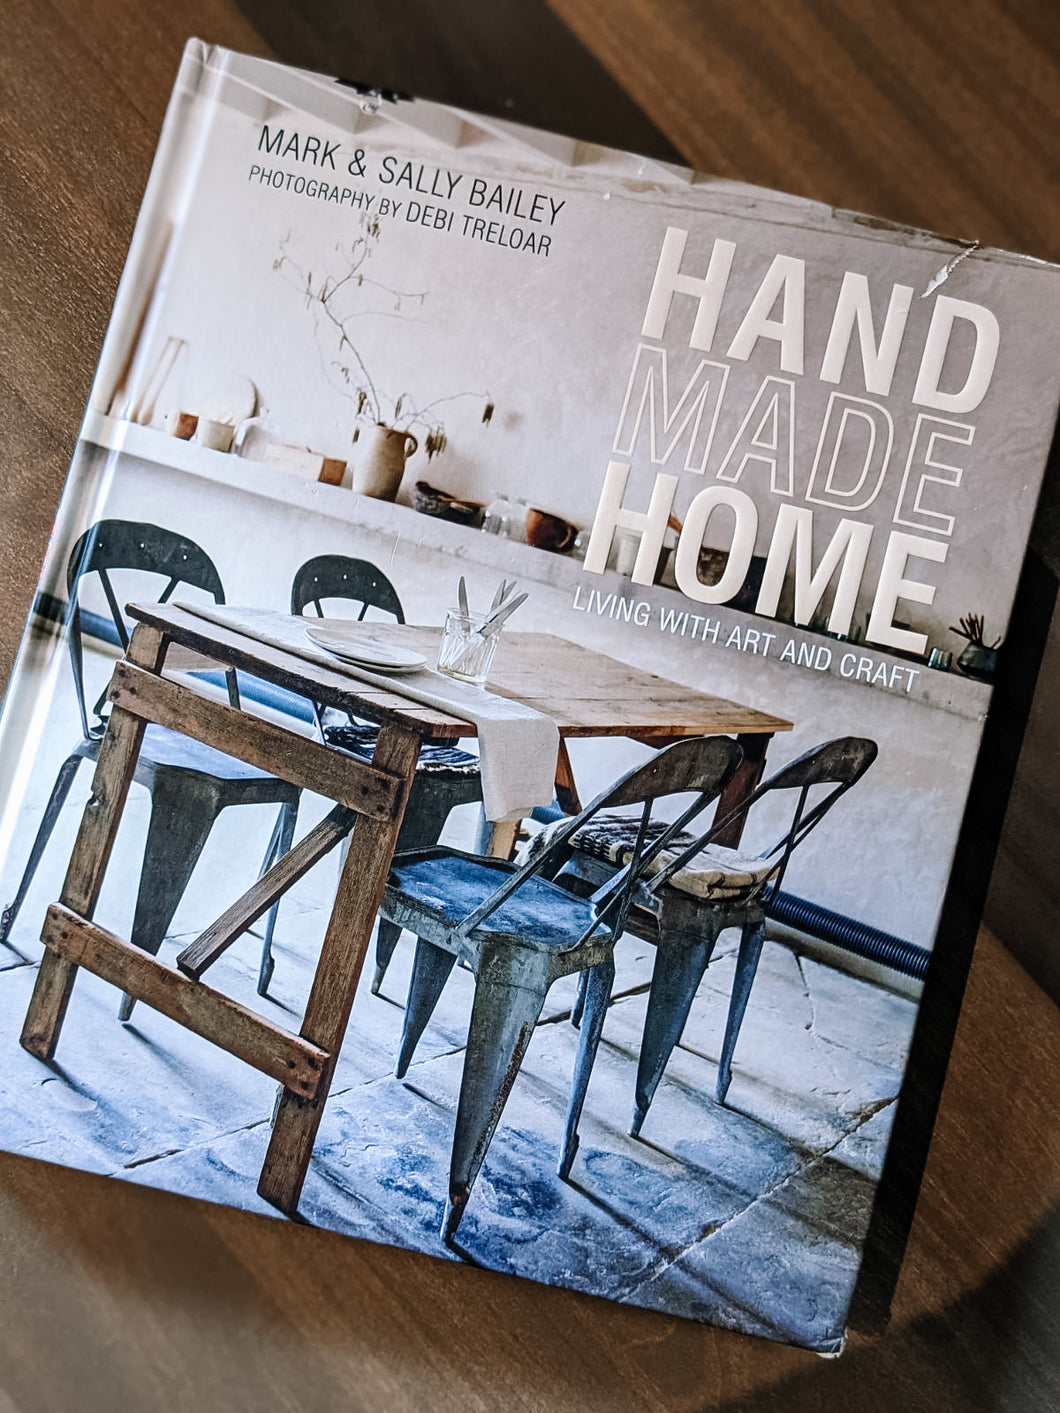 Handmade Home Book